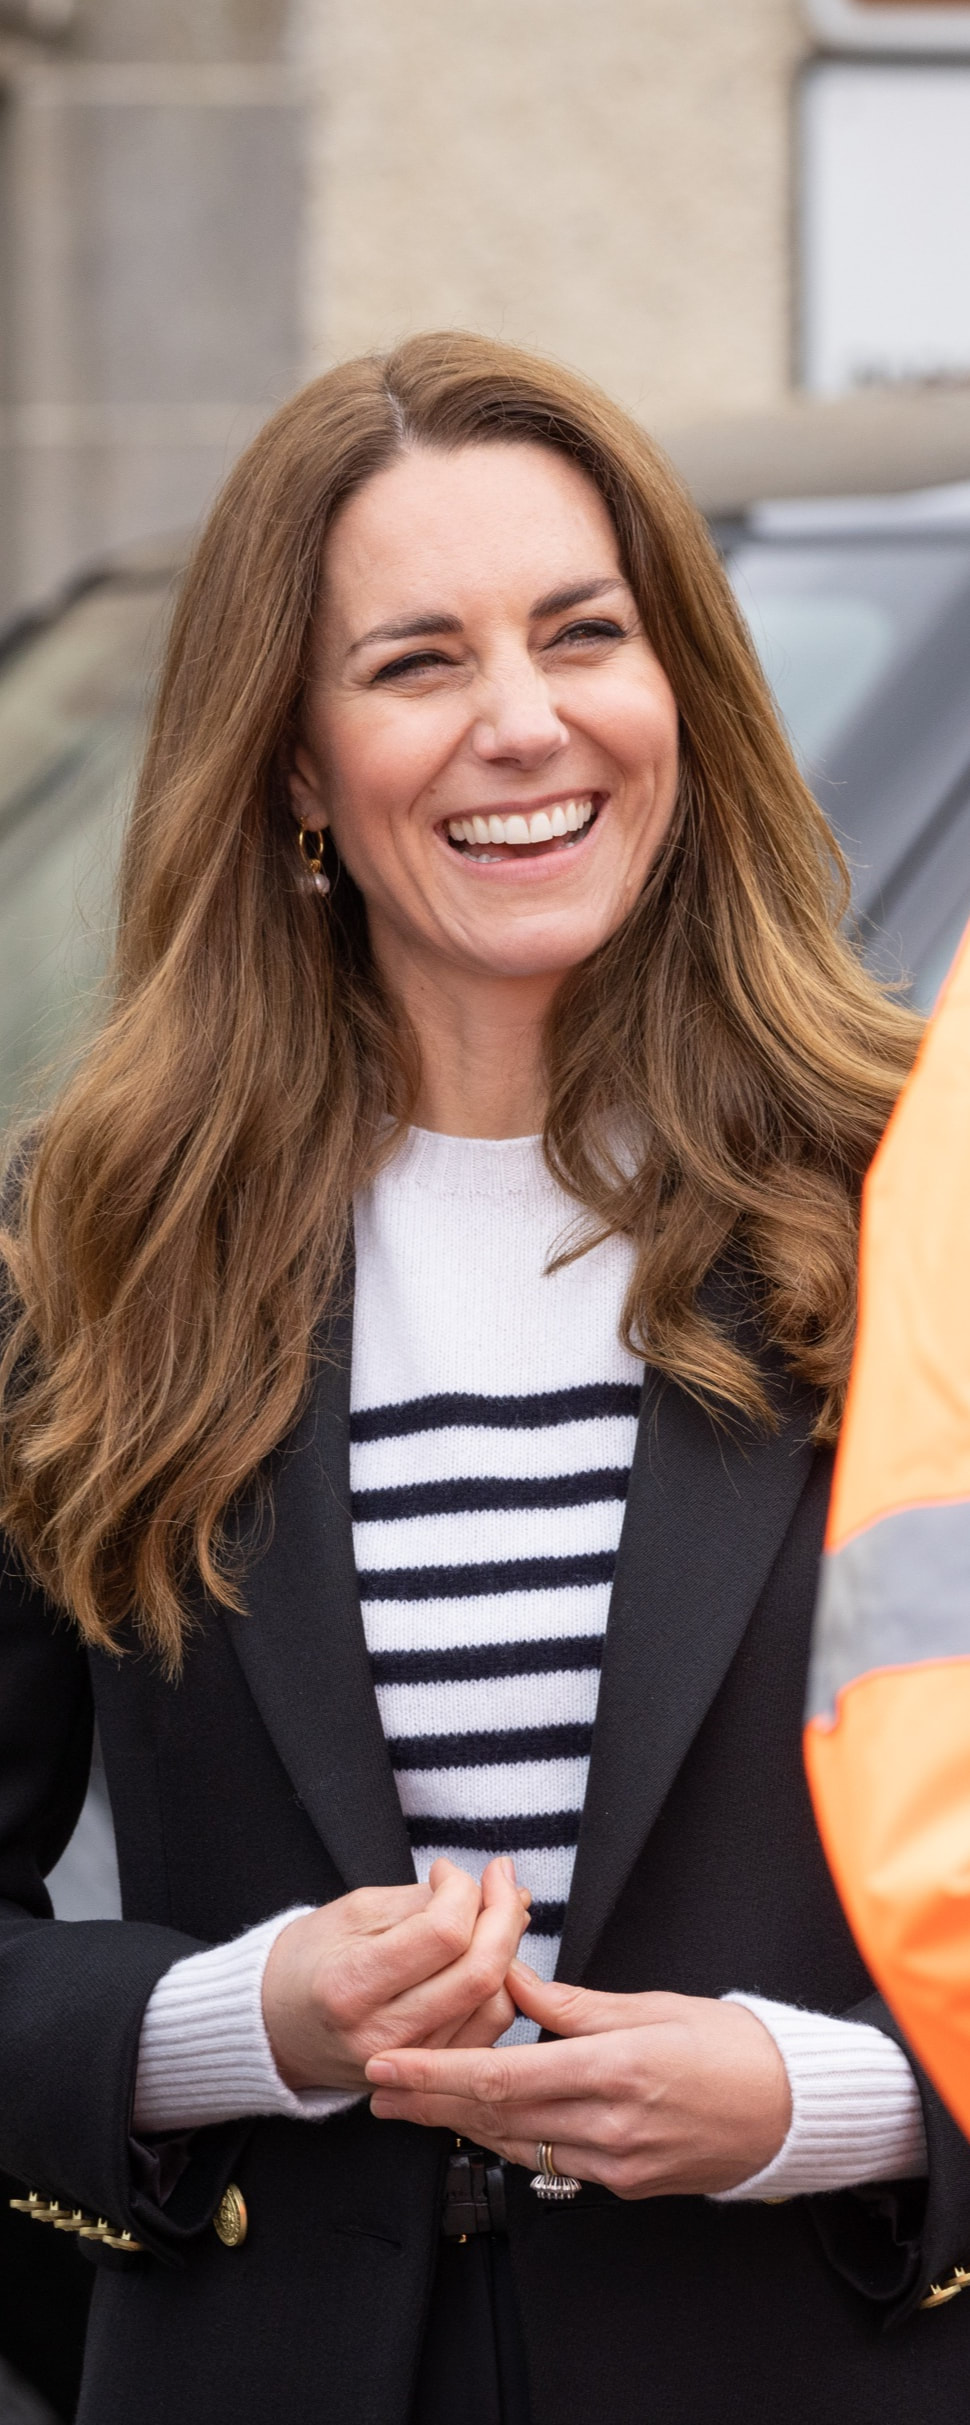 Erdem Lotus Black & White Stripe Cashmere Jumper as seen on Kate Middleton, the Duchess of Cambridge.